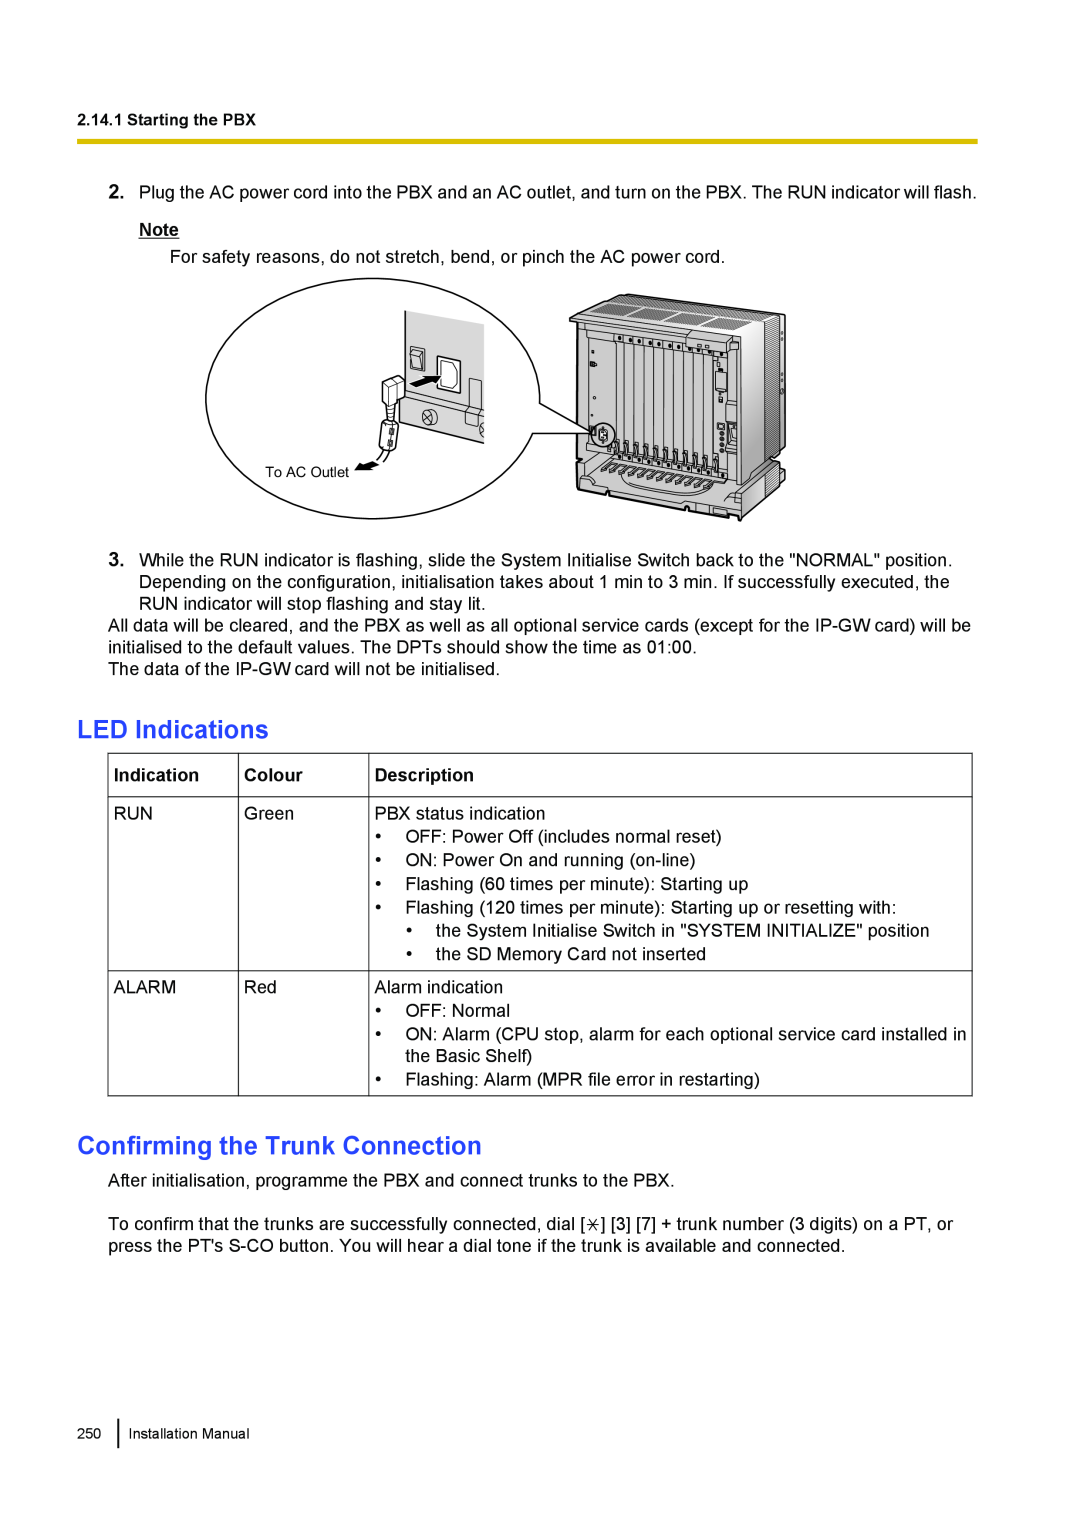 Panasonic KX-TDA100 installation manual Confirming the Trunk Connection, LED Indications, Colour, Description 